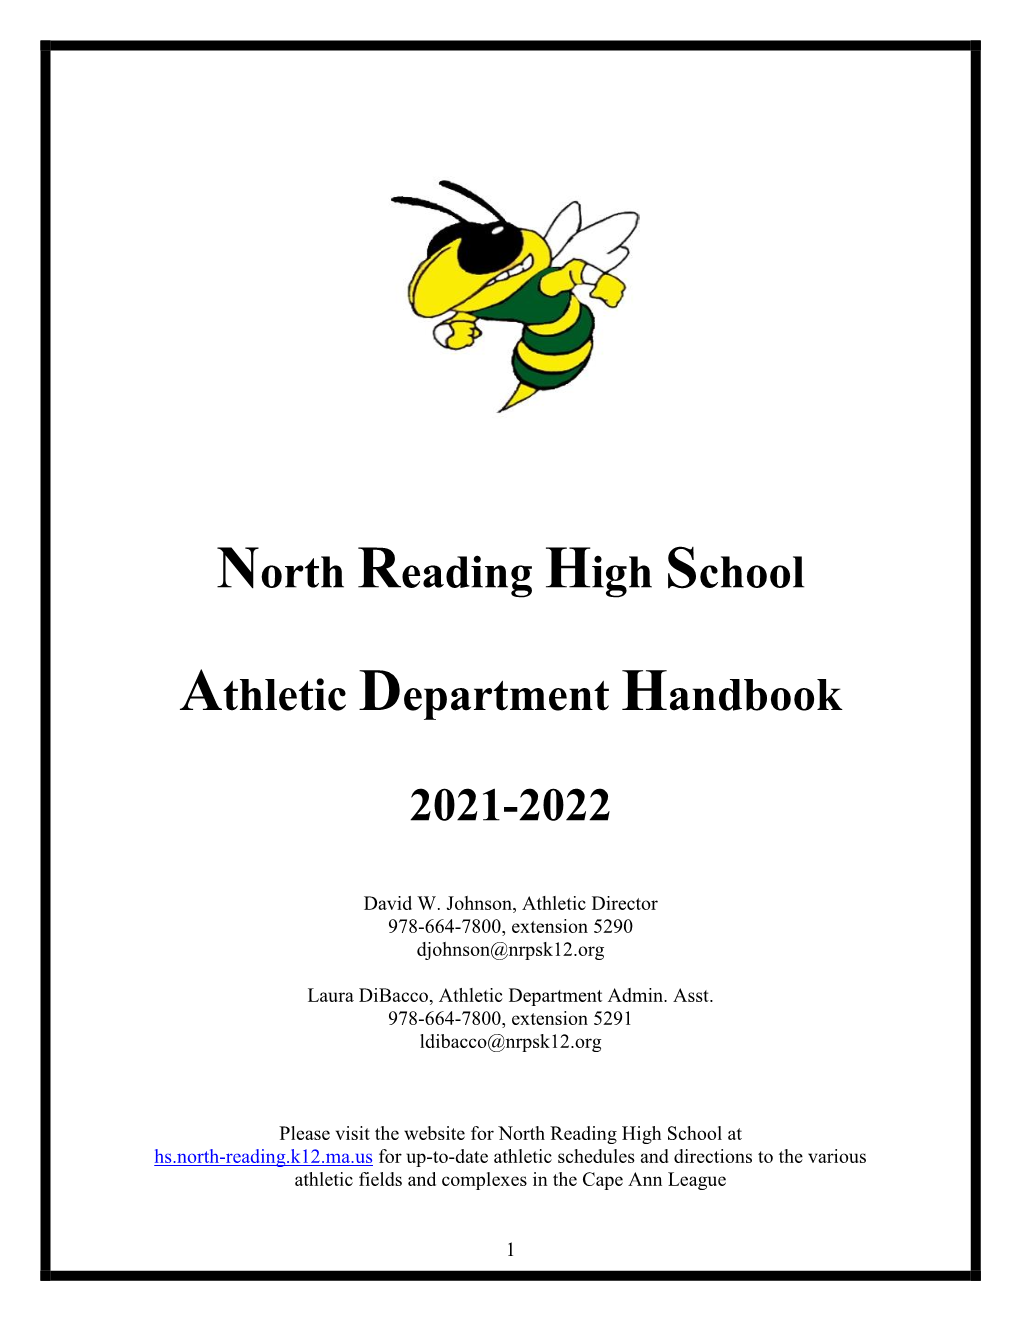 North Reading High School Athletic Department Handbook